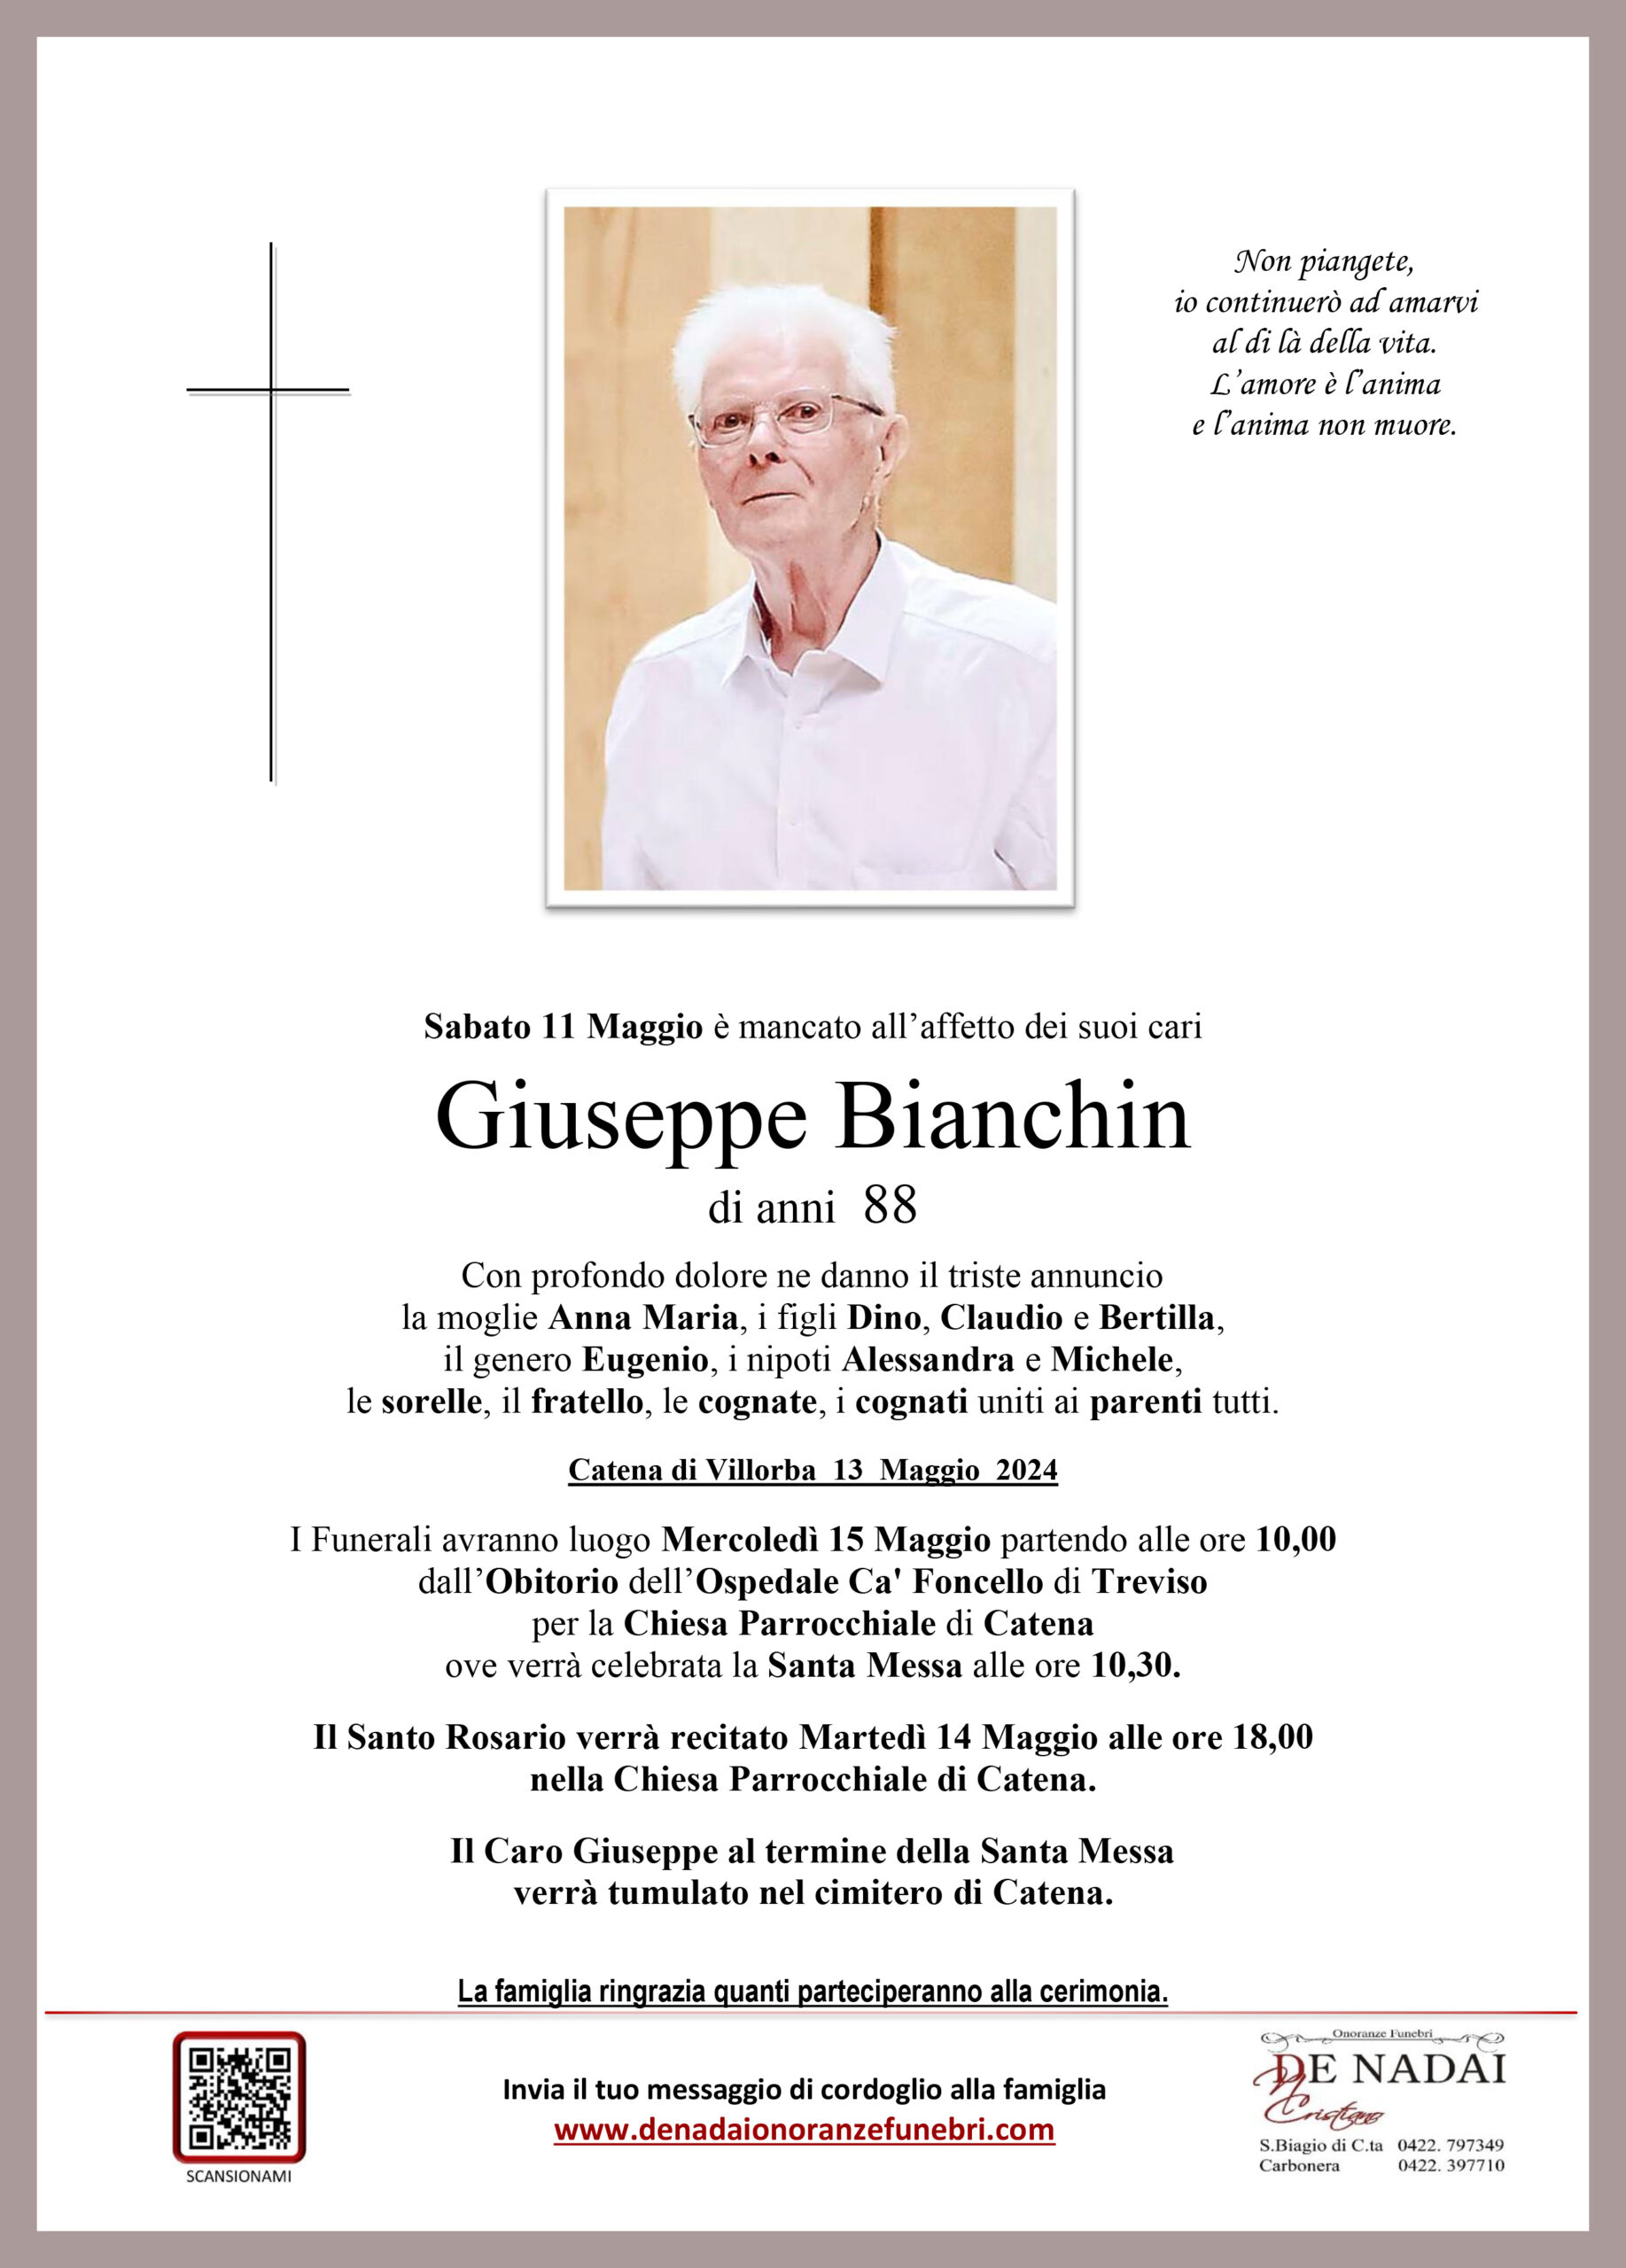 Bianchin Giuseppe